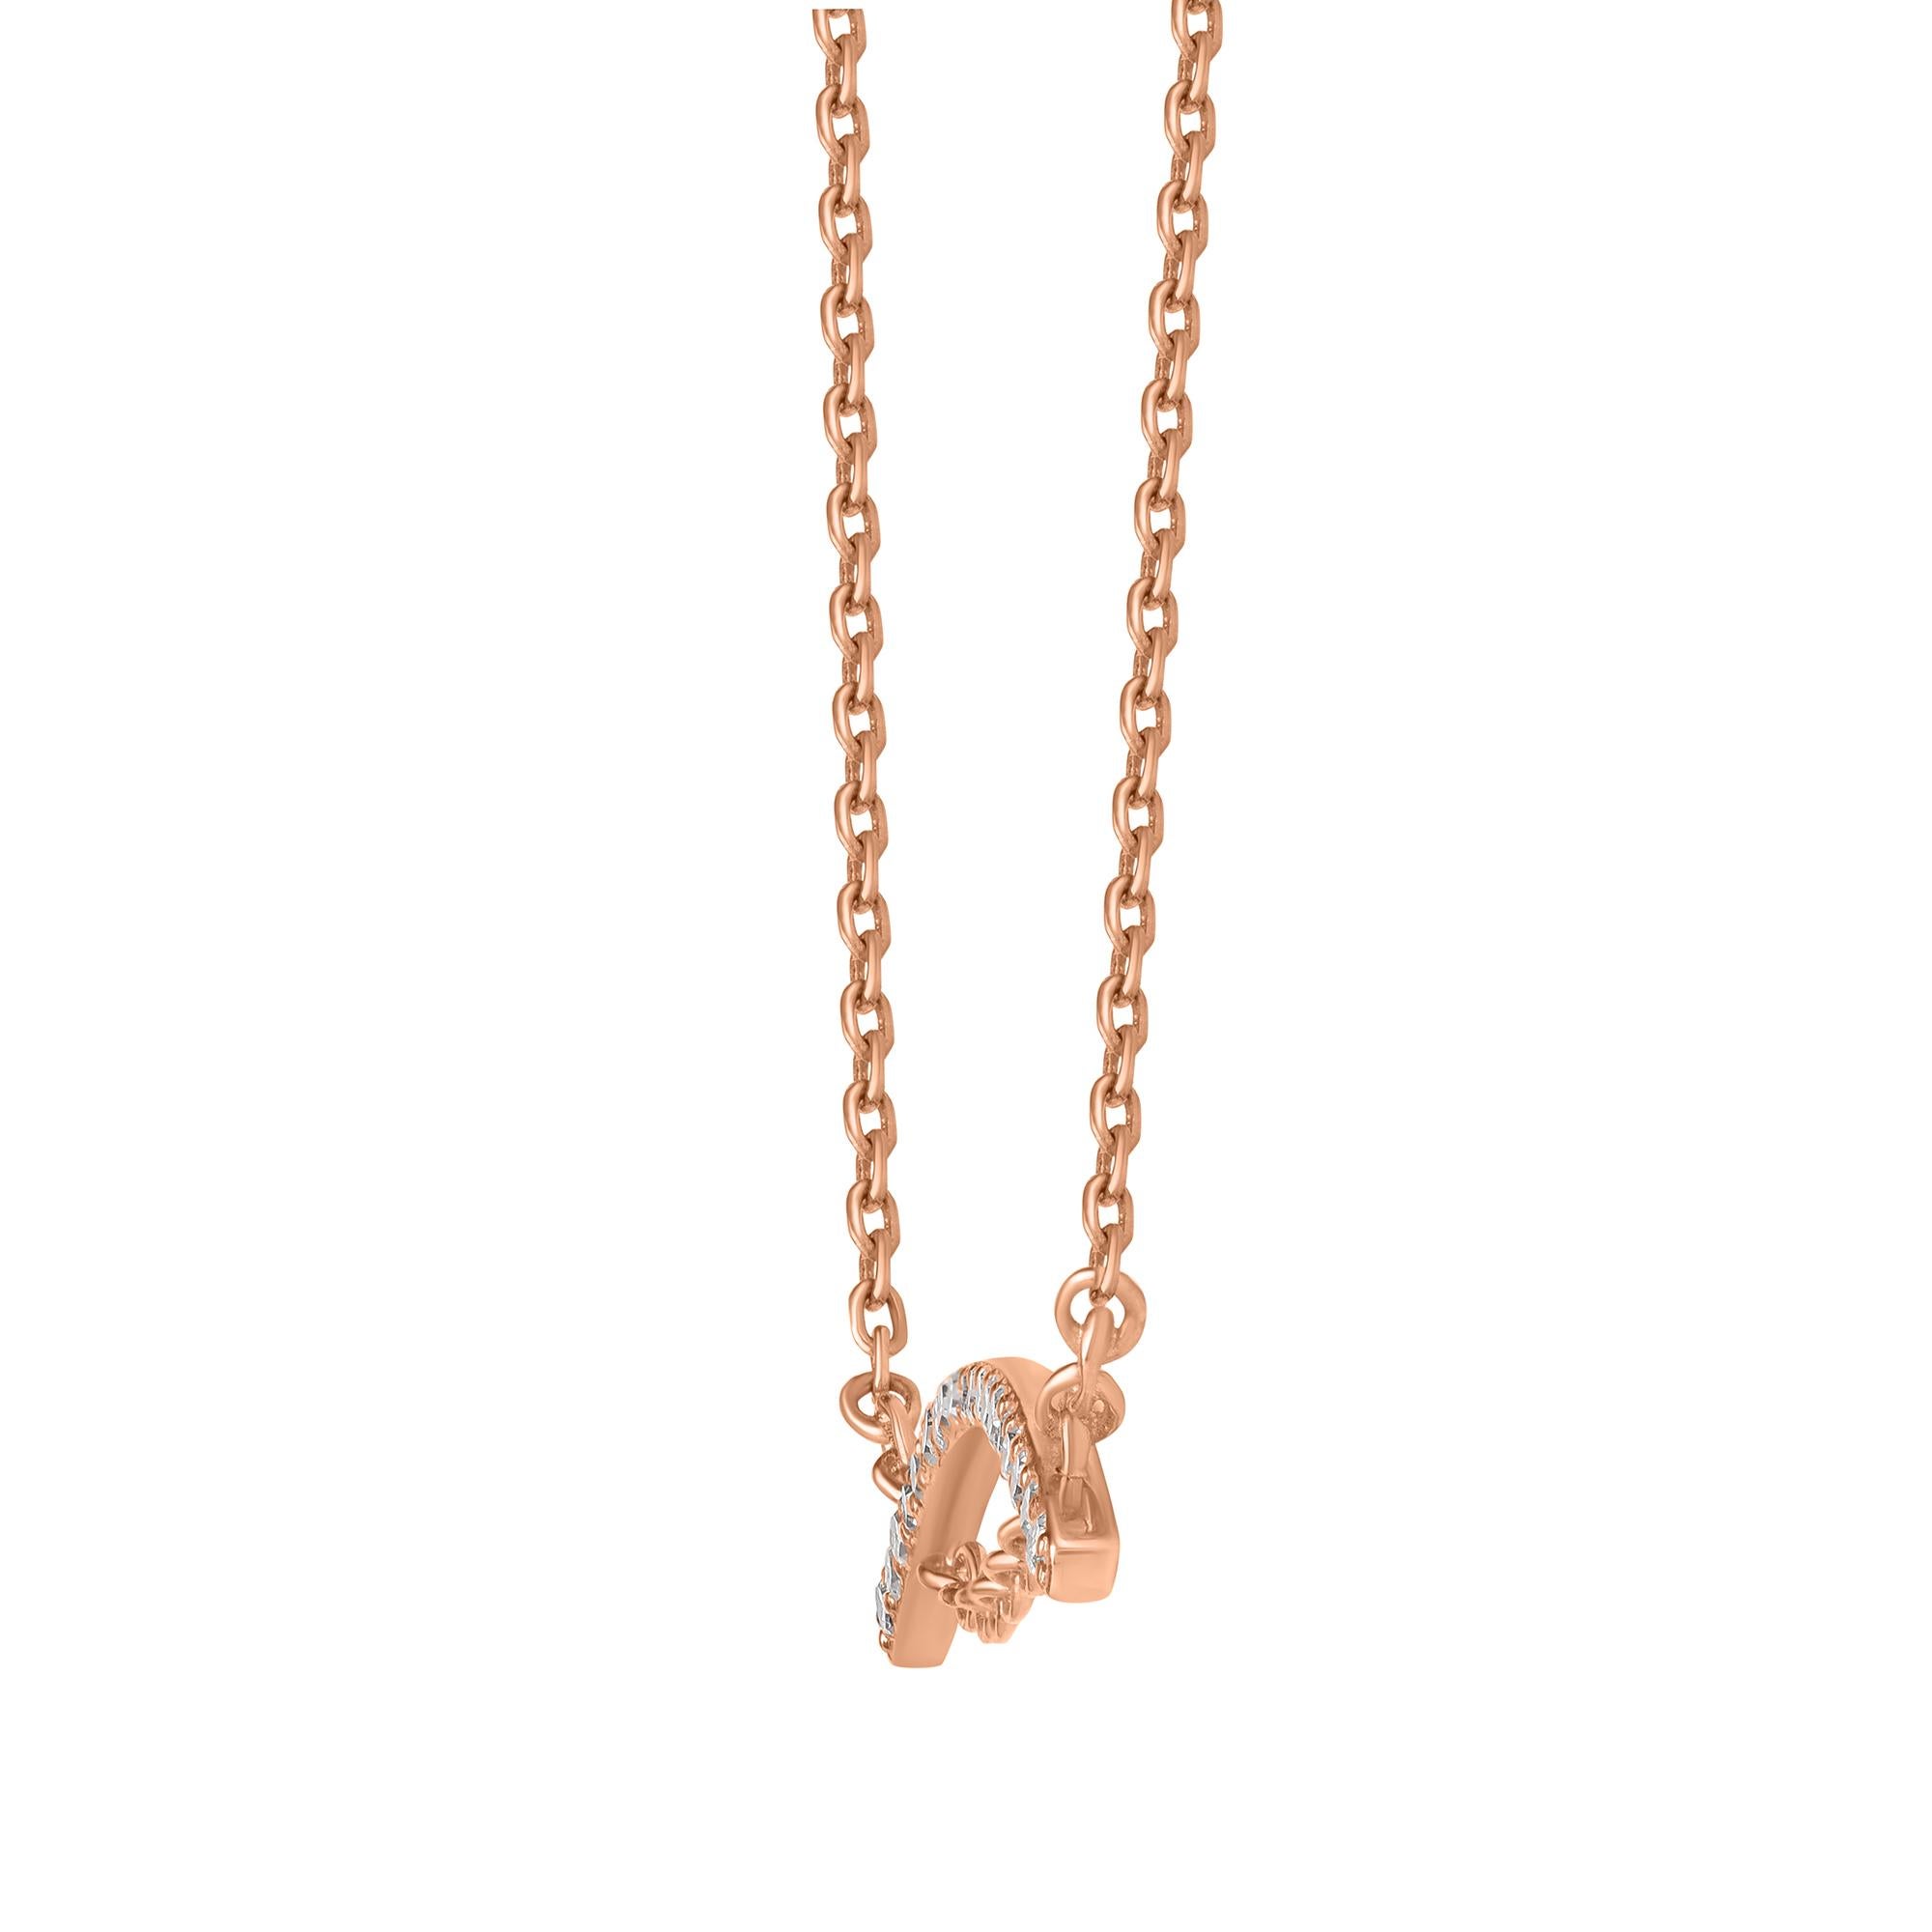 Modernist TJD 0.20 Carat Brilliant Cut Diamond 14KT Rose Gold Fashion Pendants Necklace For Sale